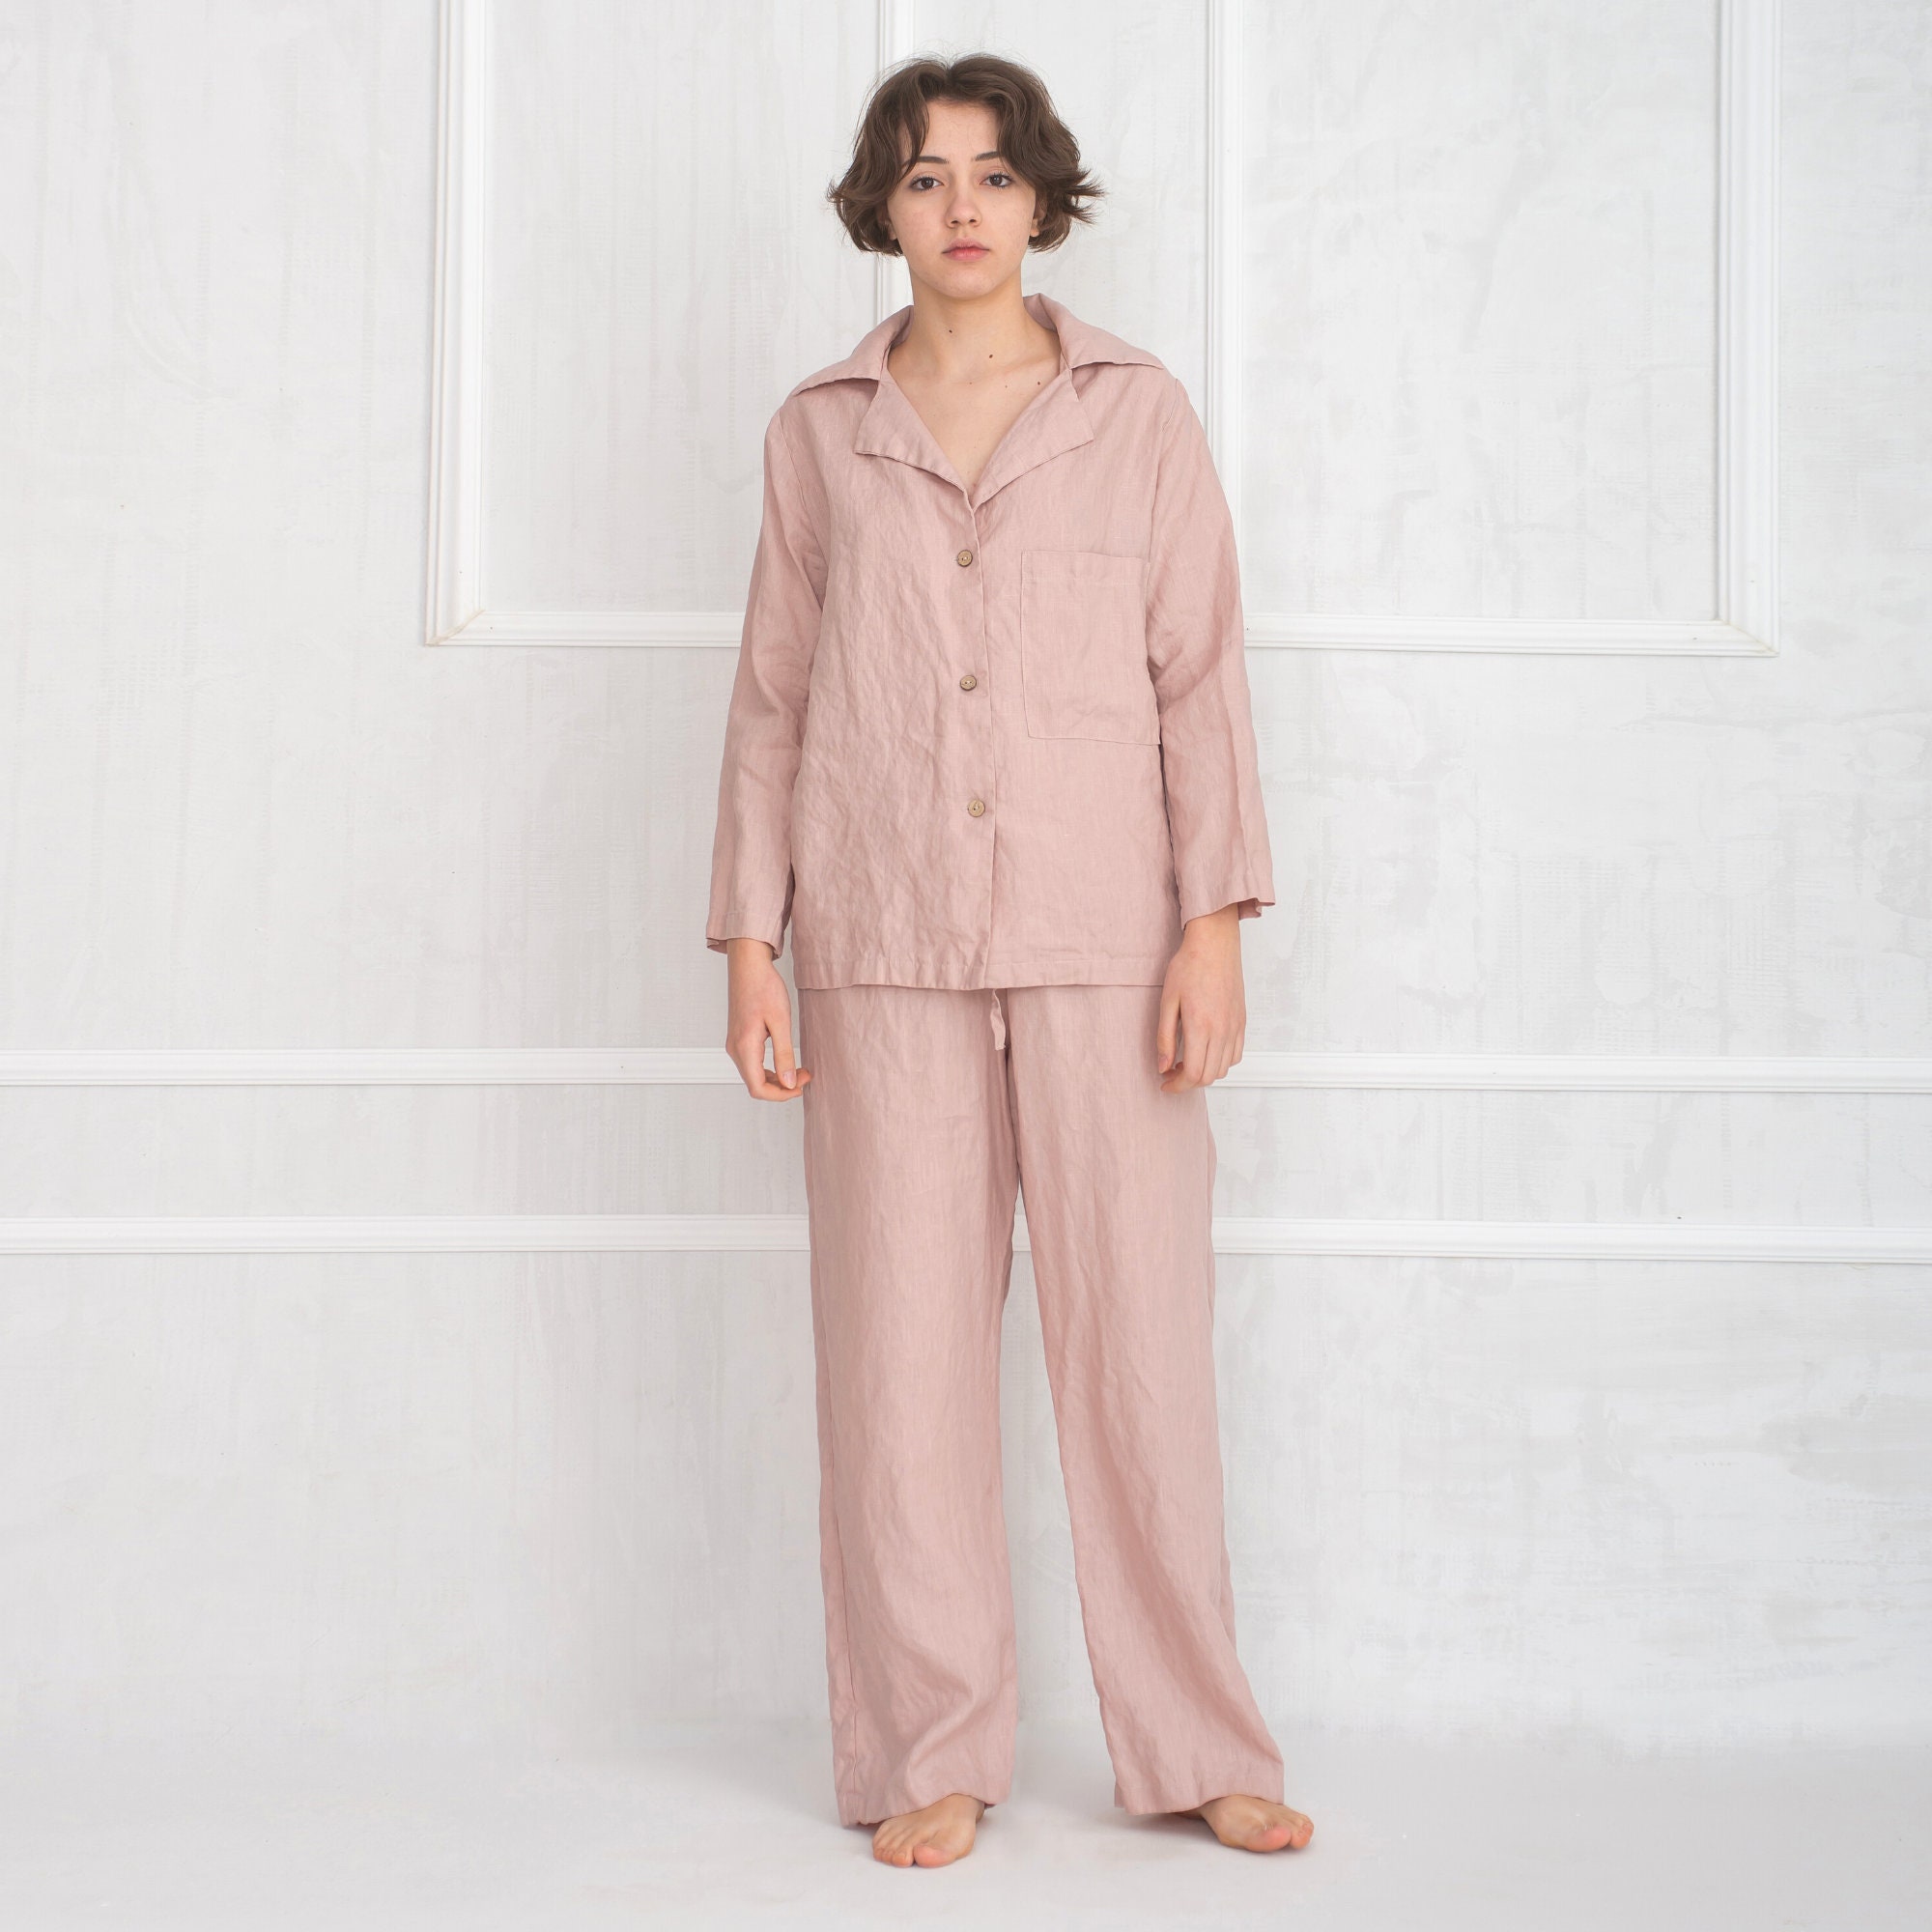 Linen Pyjamas / Linen Sleepwear / Women Pajama Set - Etsy